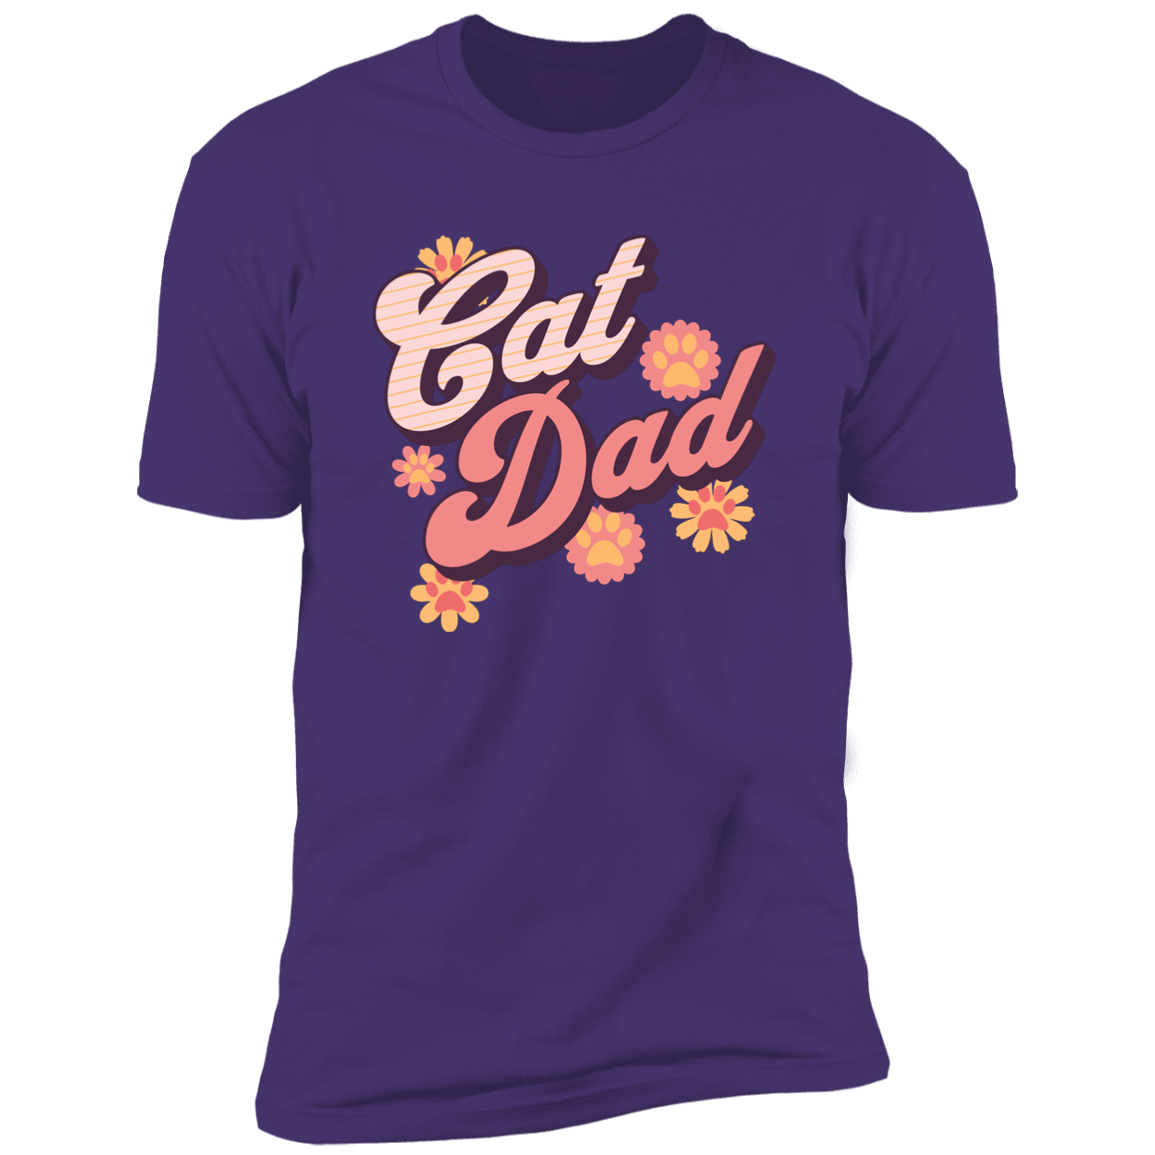 Cat Dad Retro T-shirt, Cat Dad Shirt for humans, in purple rush